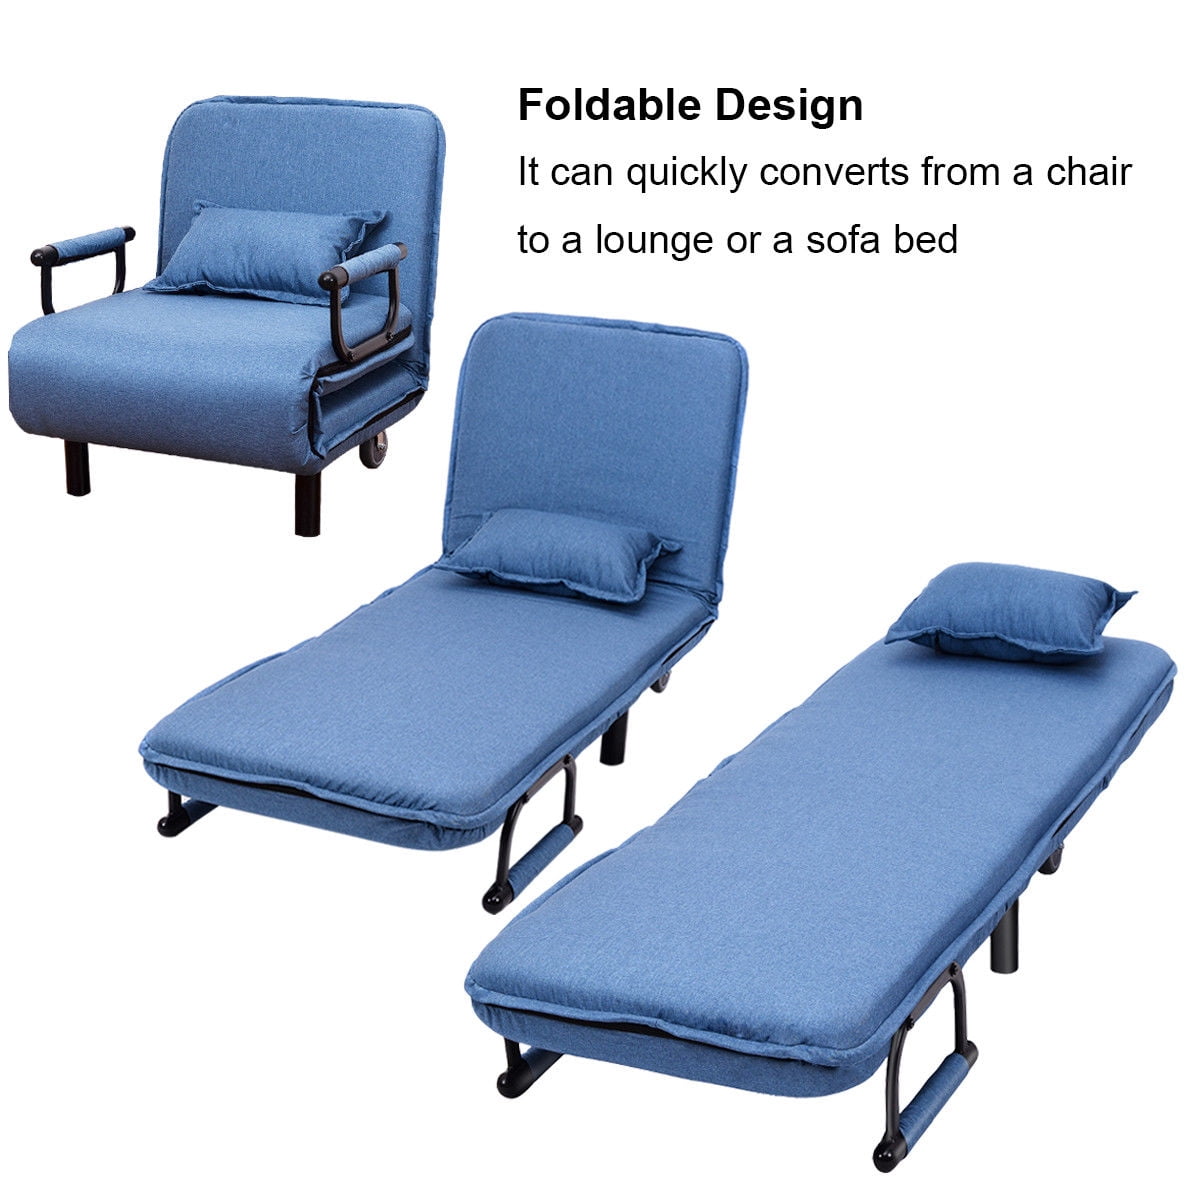 Costway Folding Sofa Bed Sleeper Convertible Armchair Leisure Chaise Lounge Couch Blue Walmart Com Walmart Com